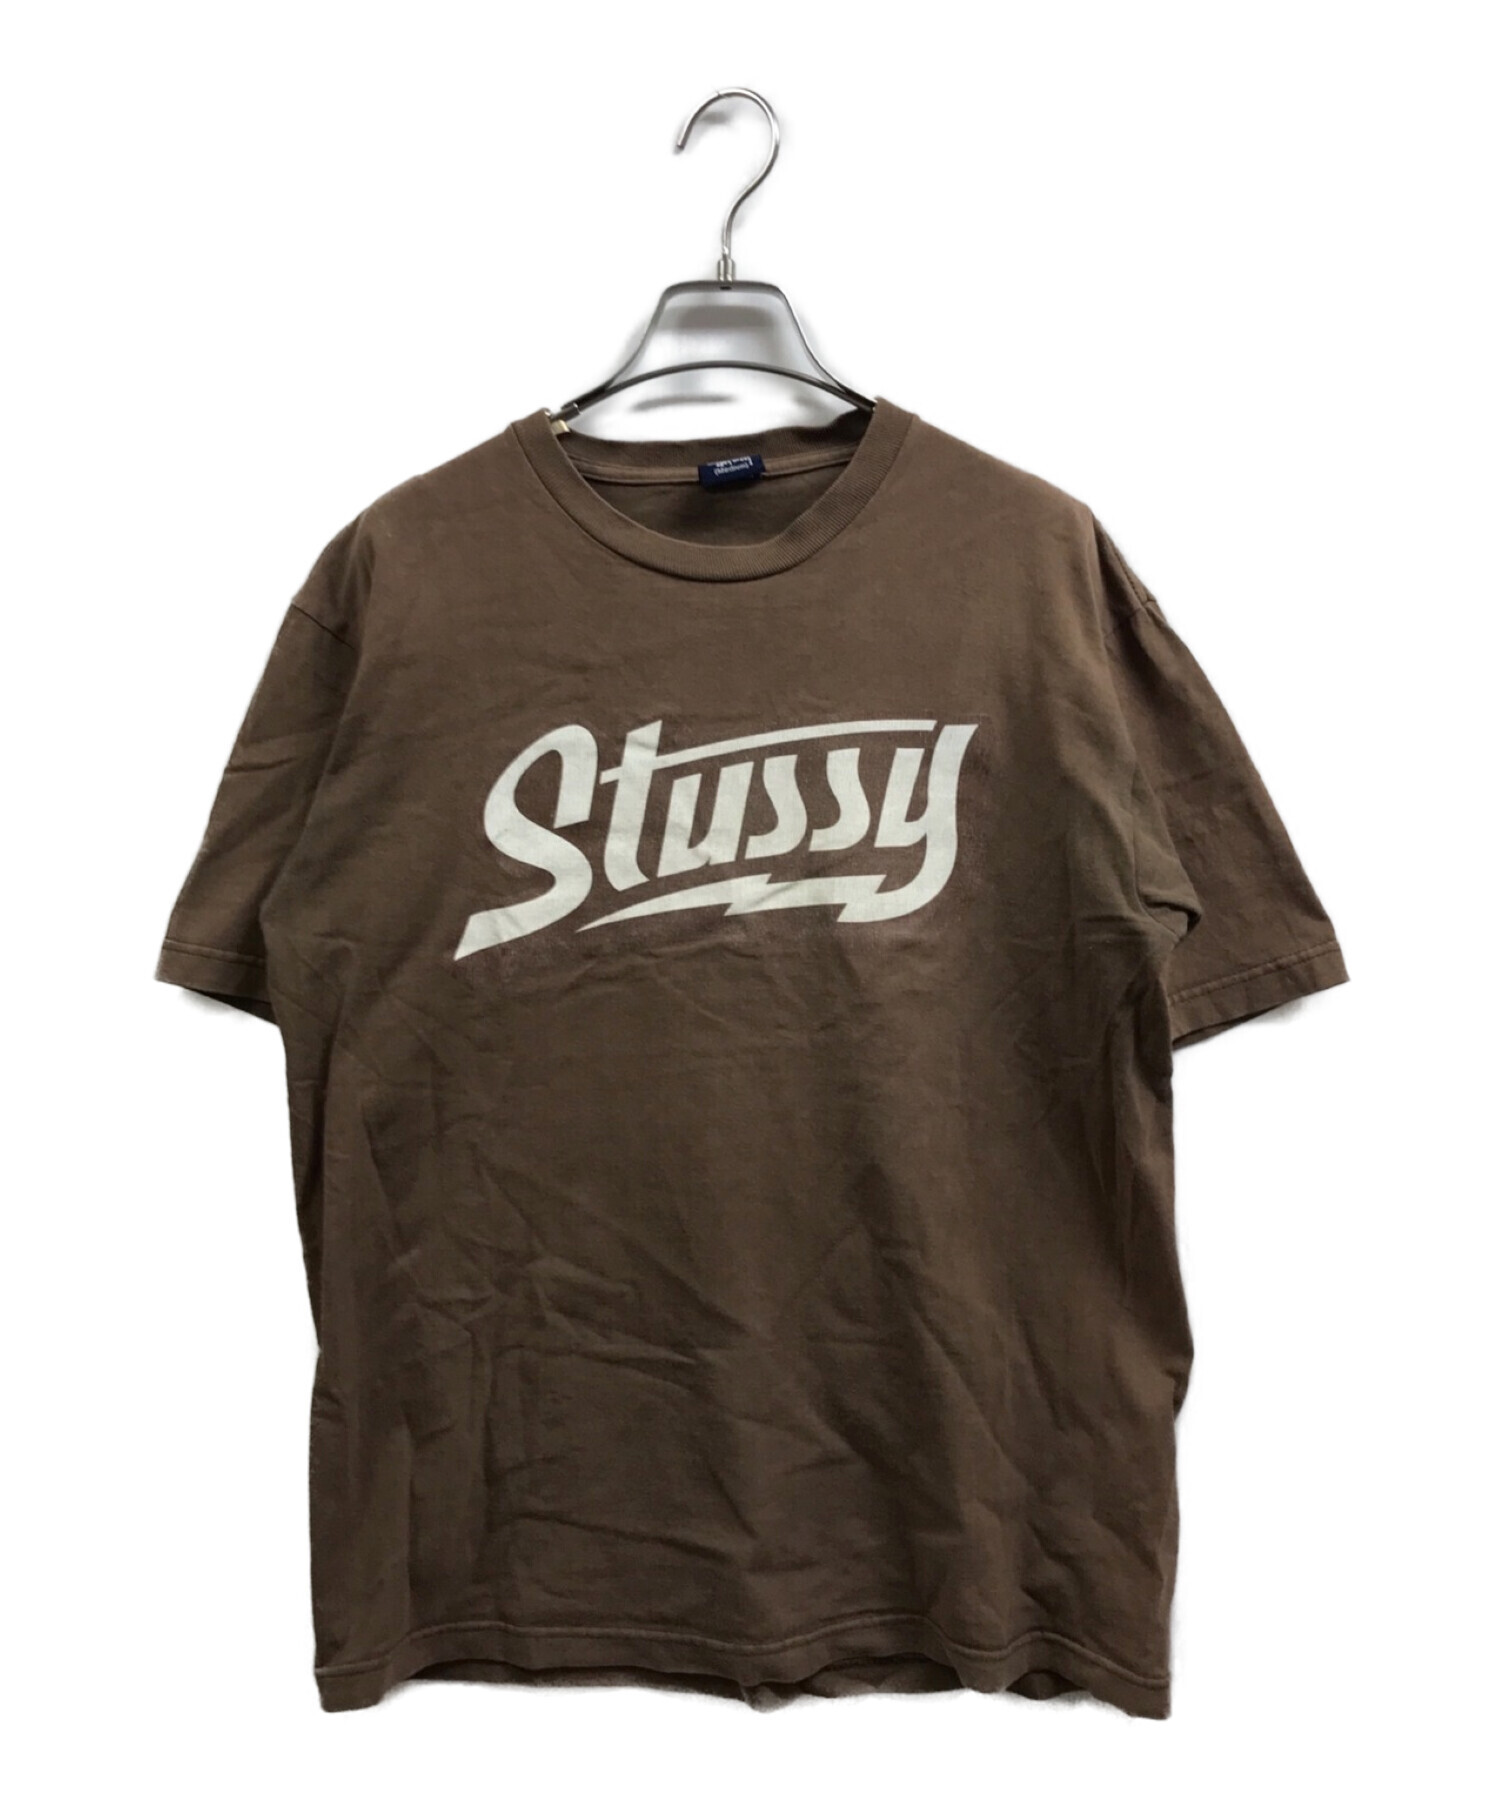 OLD STUSSY /T shirt